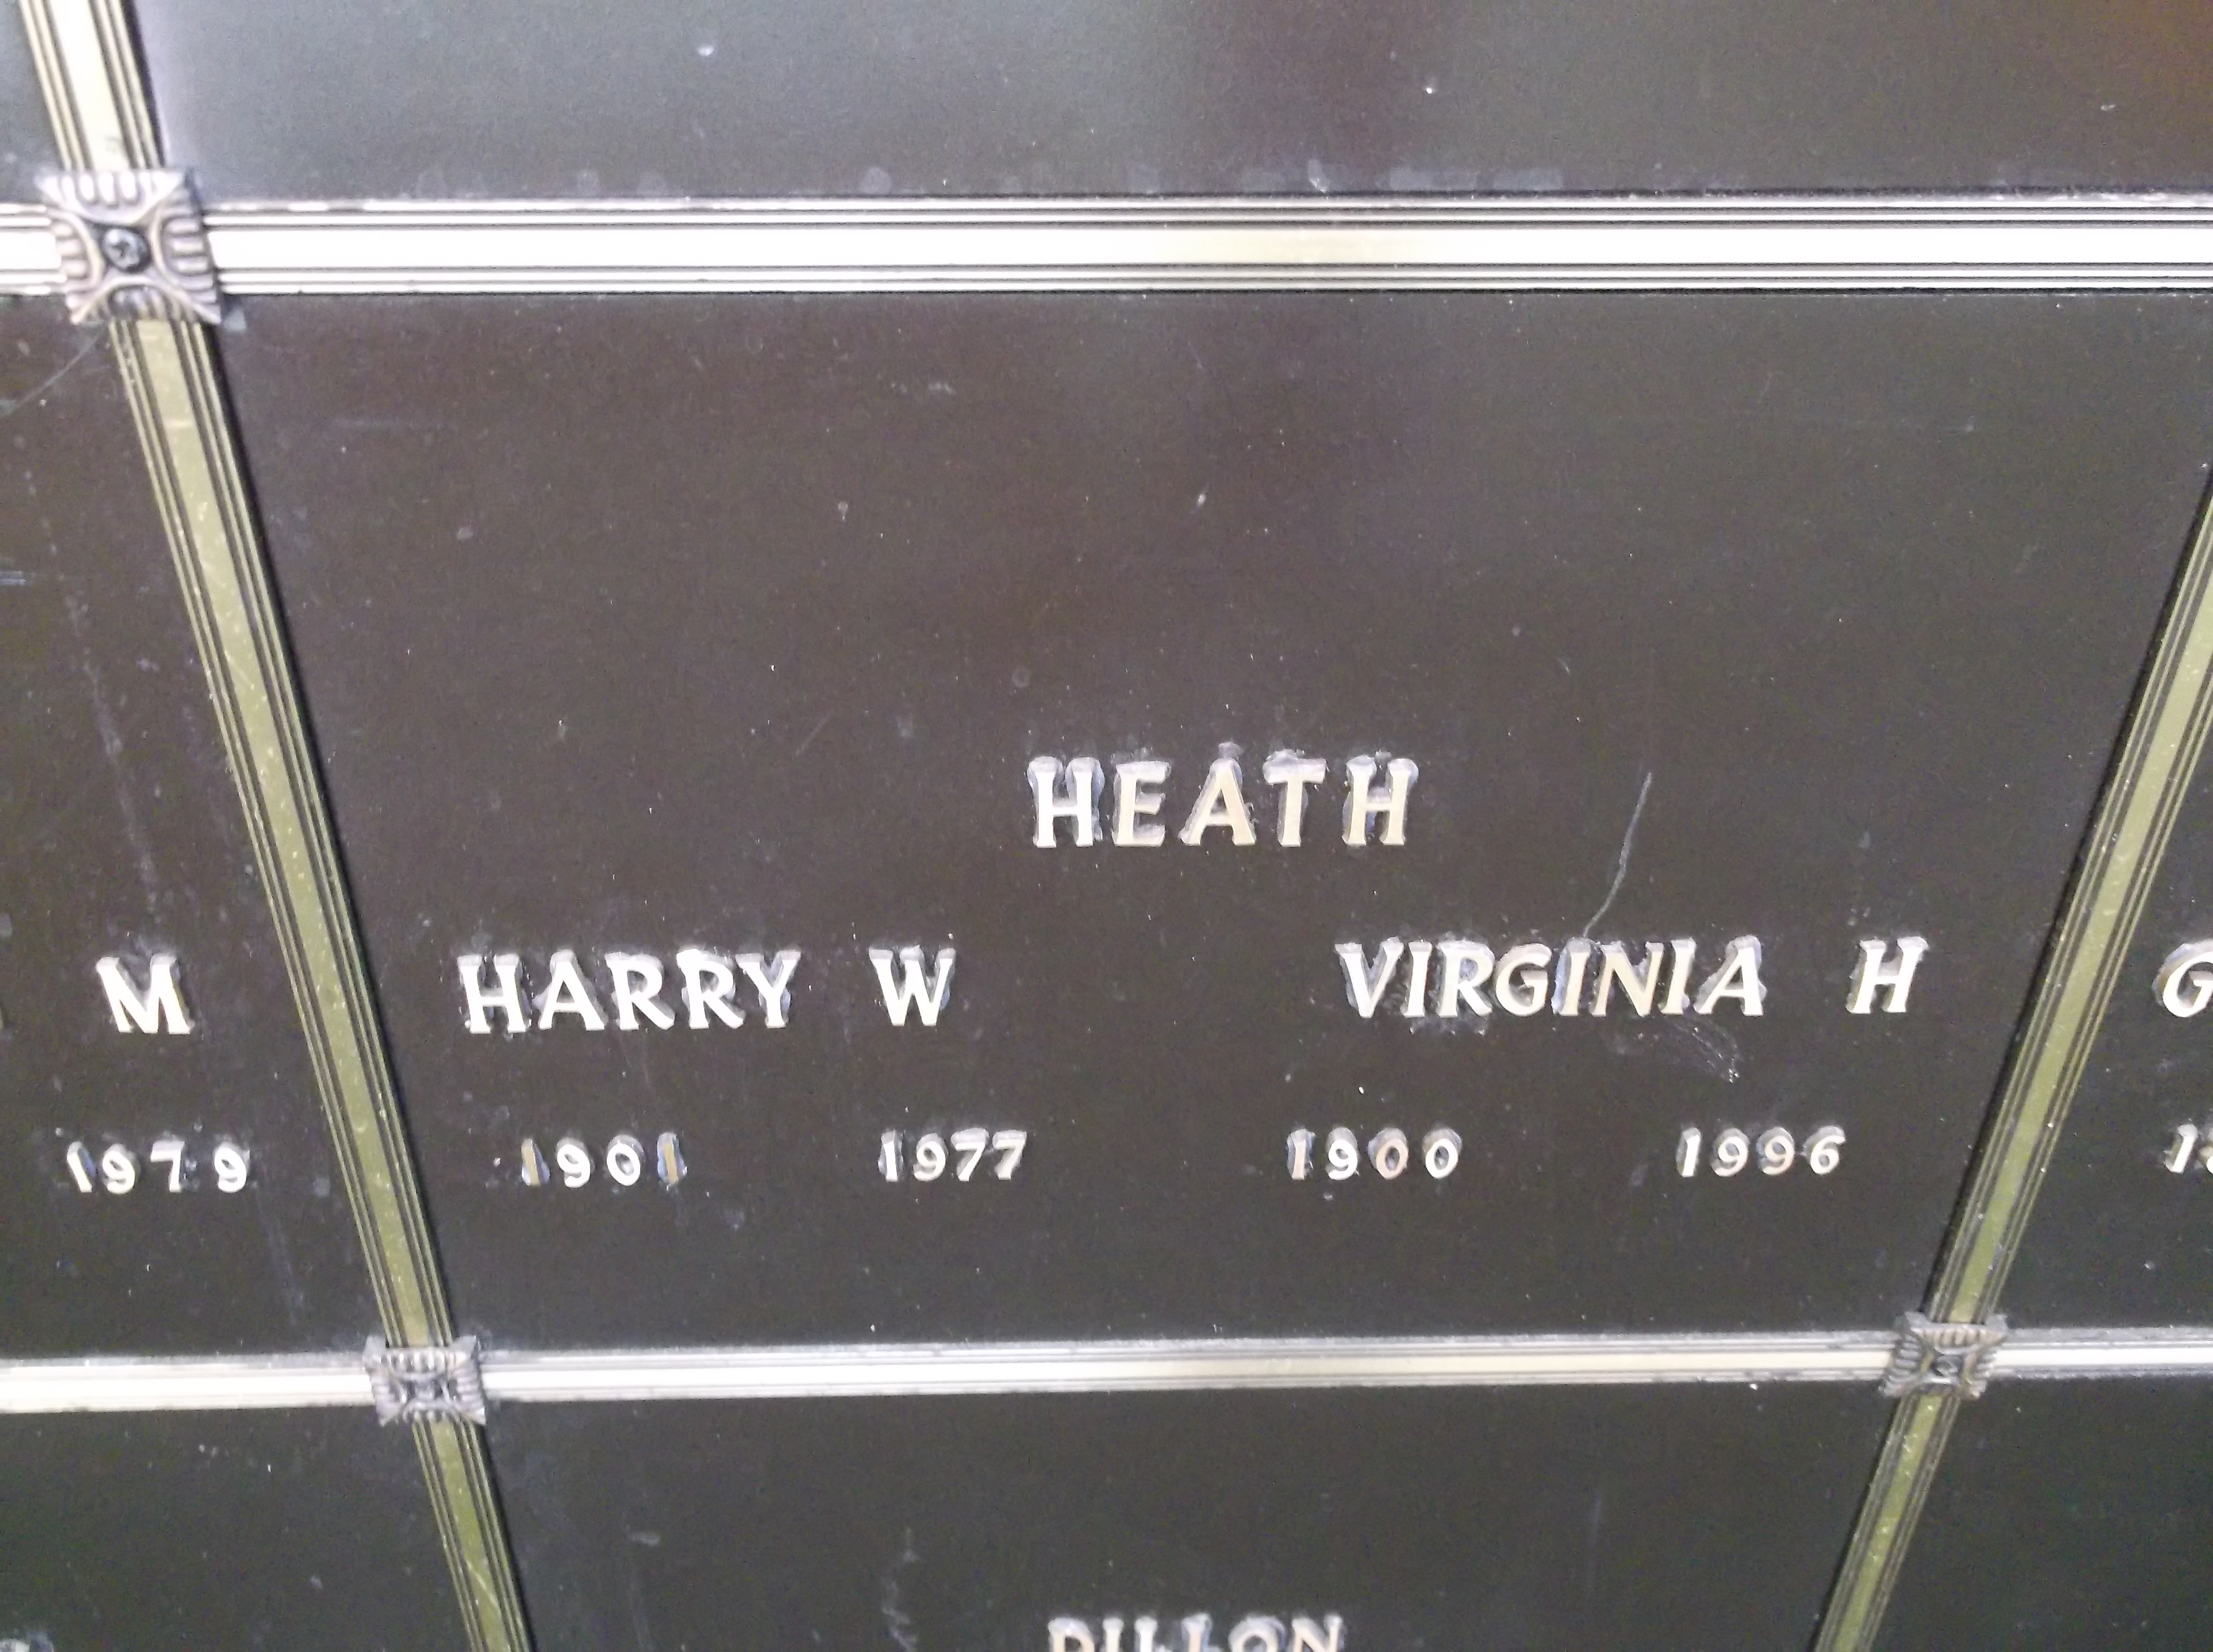 Harry W Heath